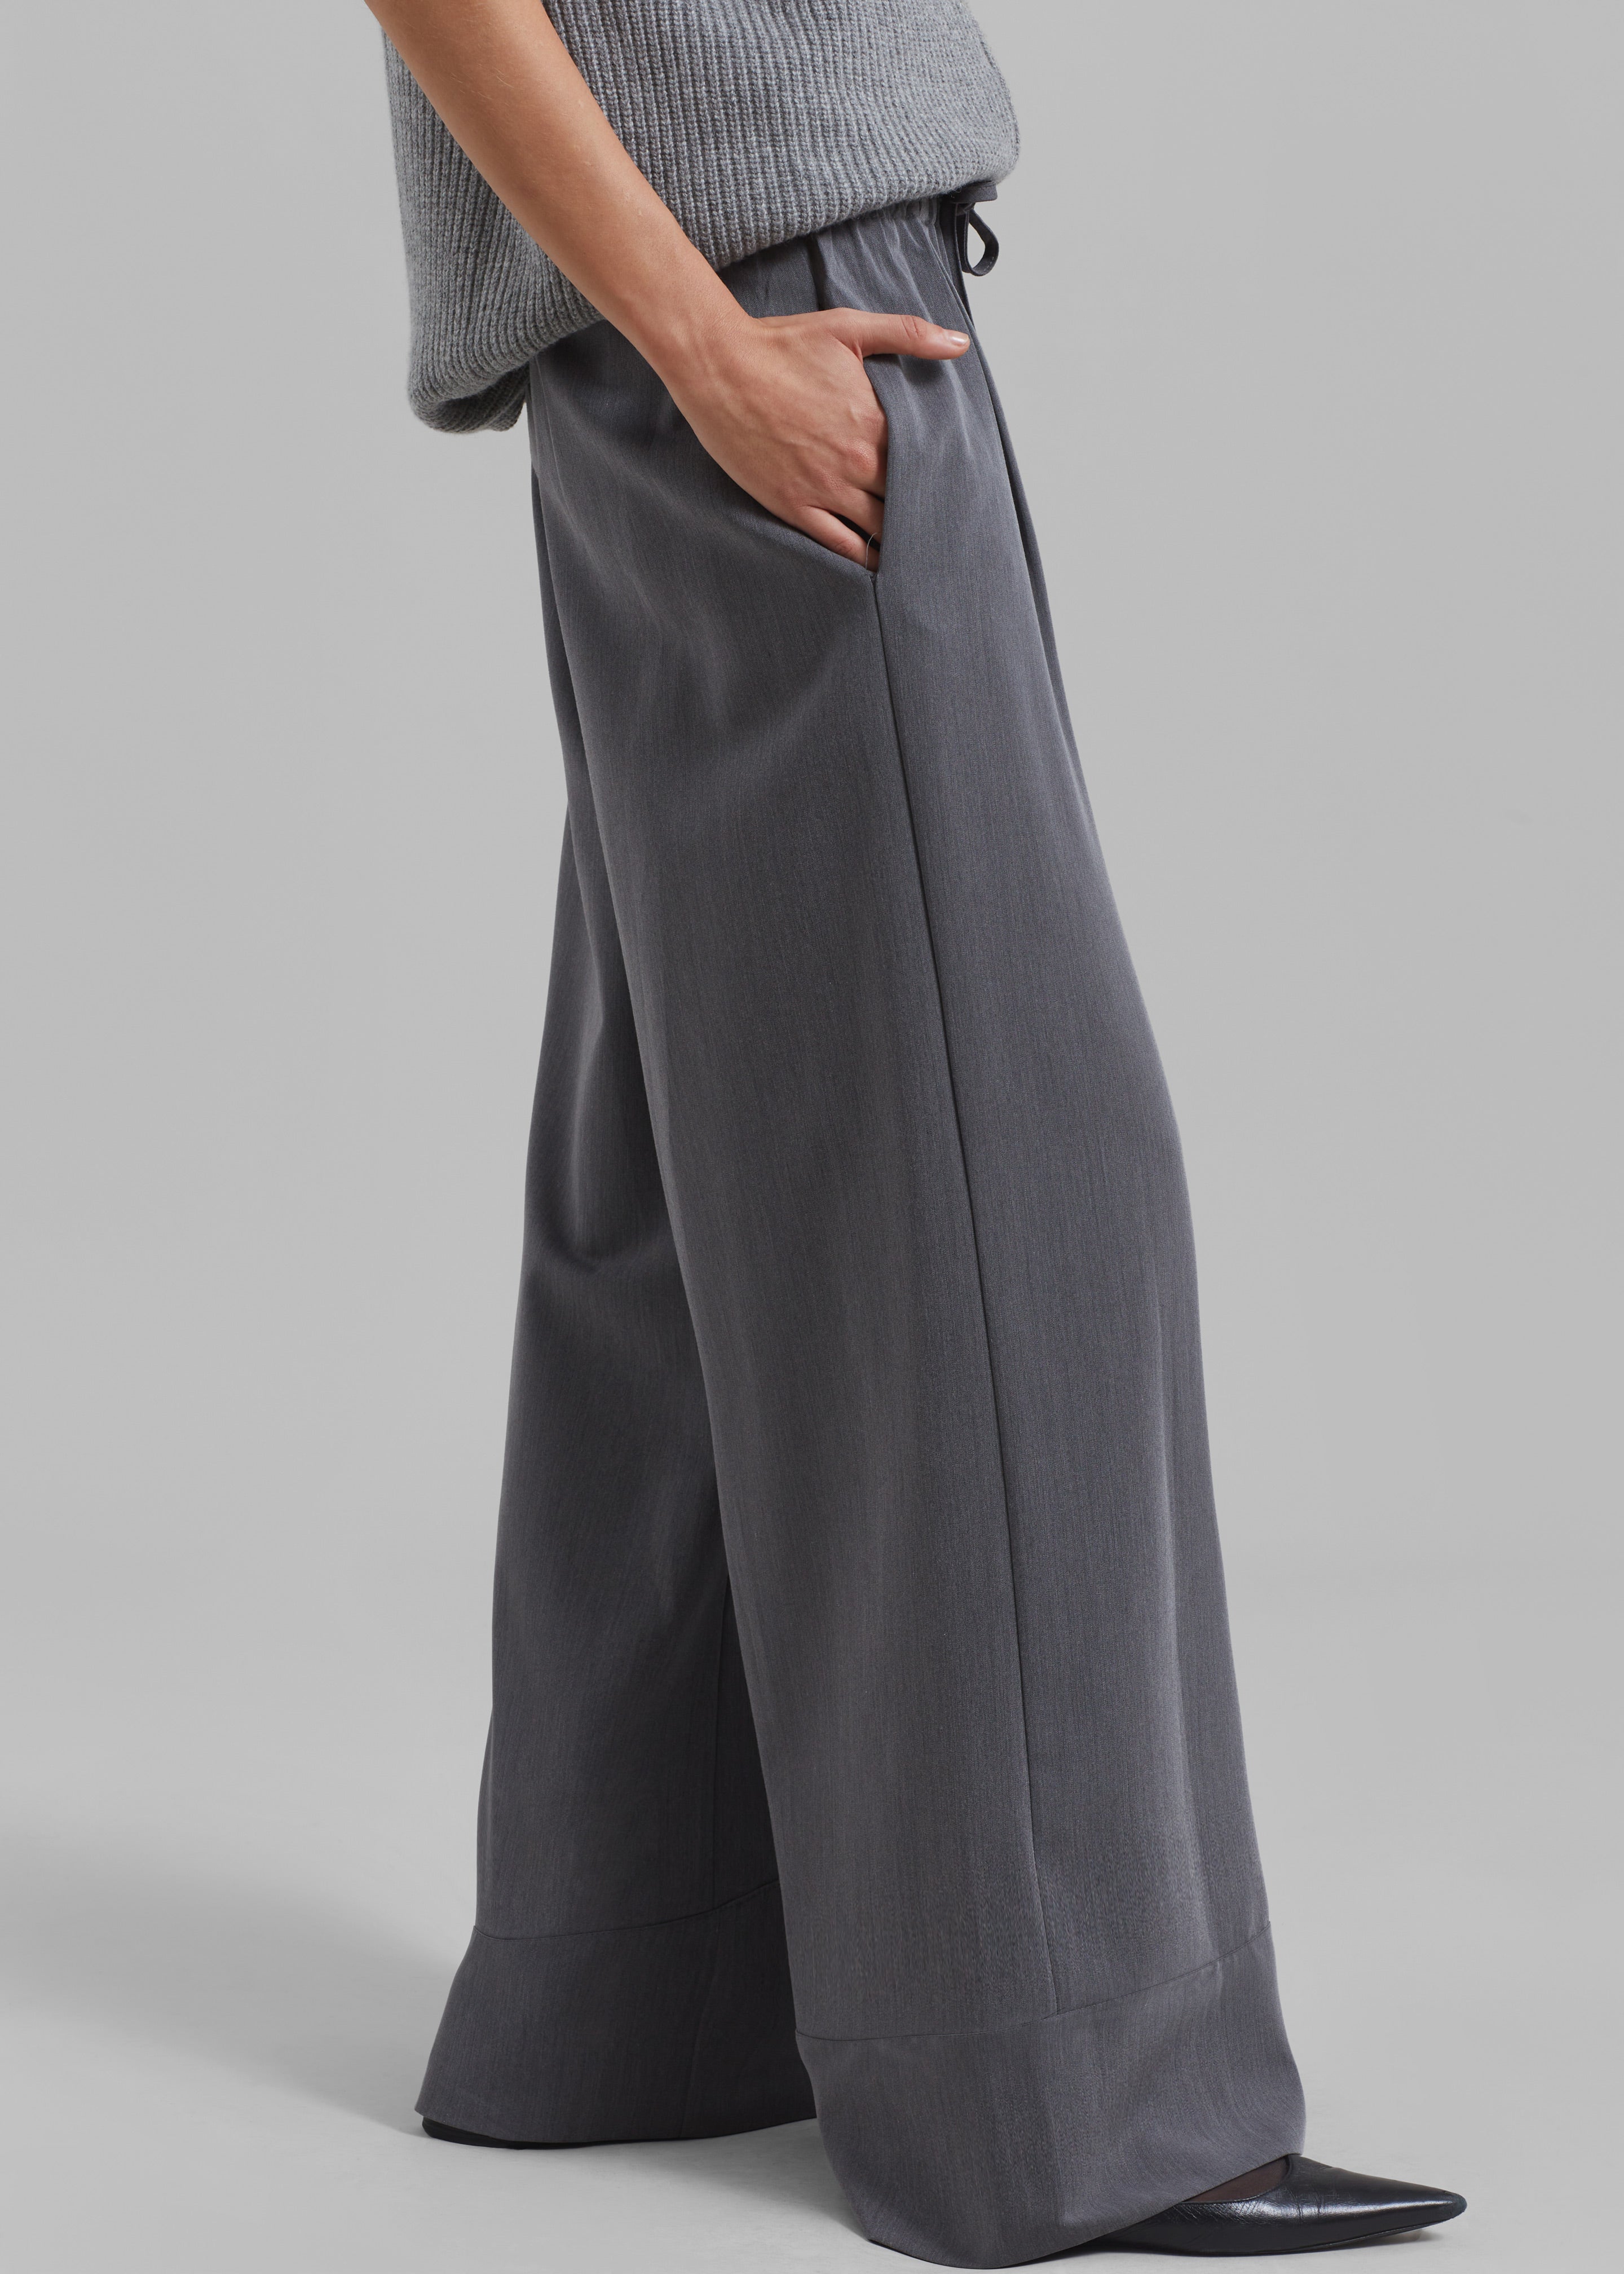 Hadley Wide Drawstring Pants - Grey - 5